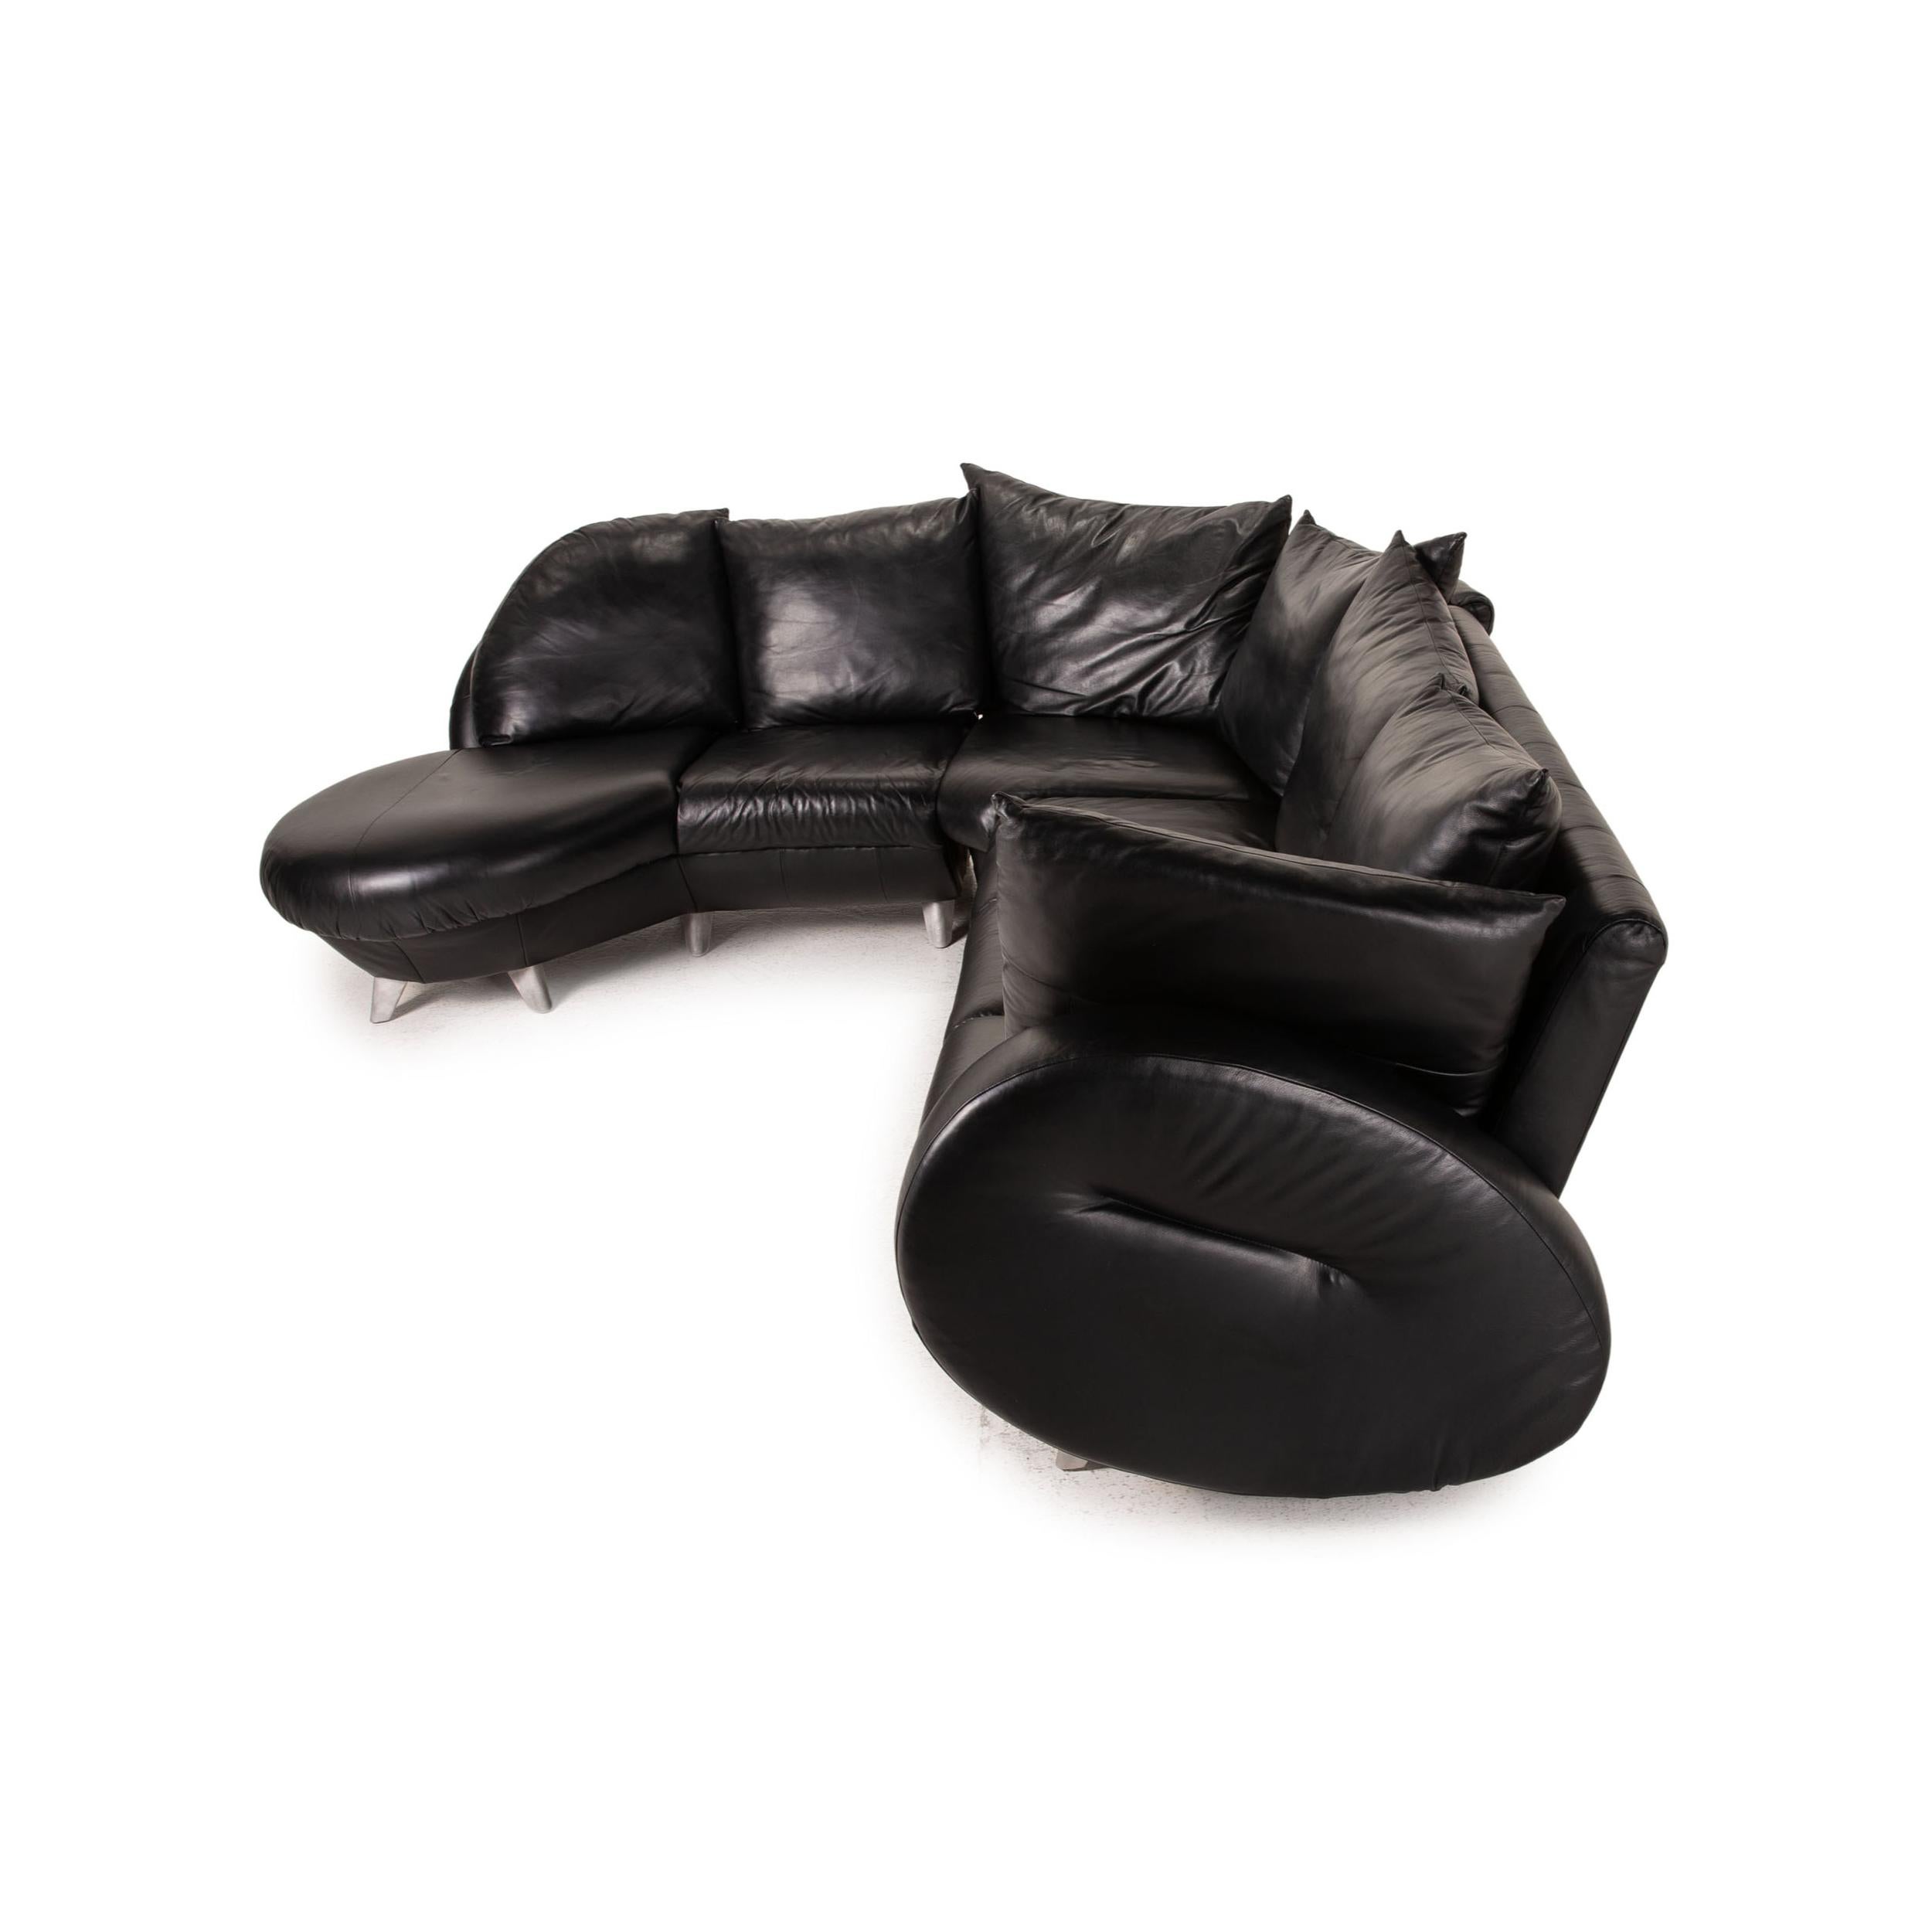 Bretz Popeye Leather Sofa Black Corner Sofa Couch 3